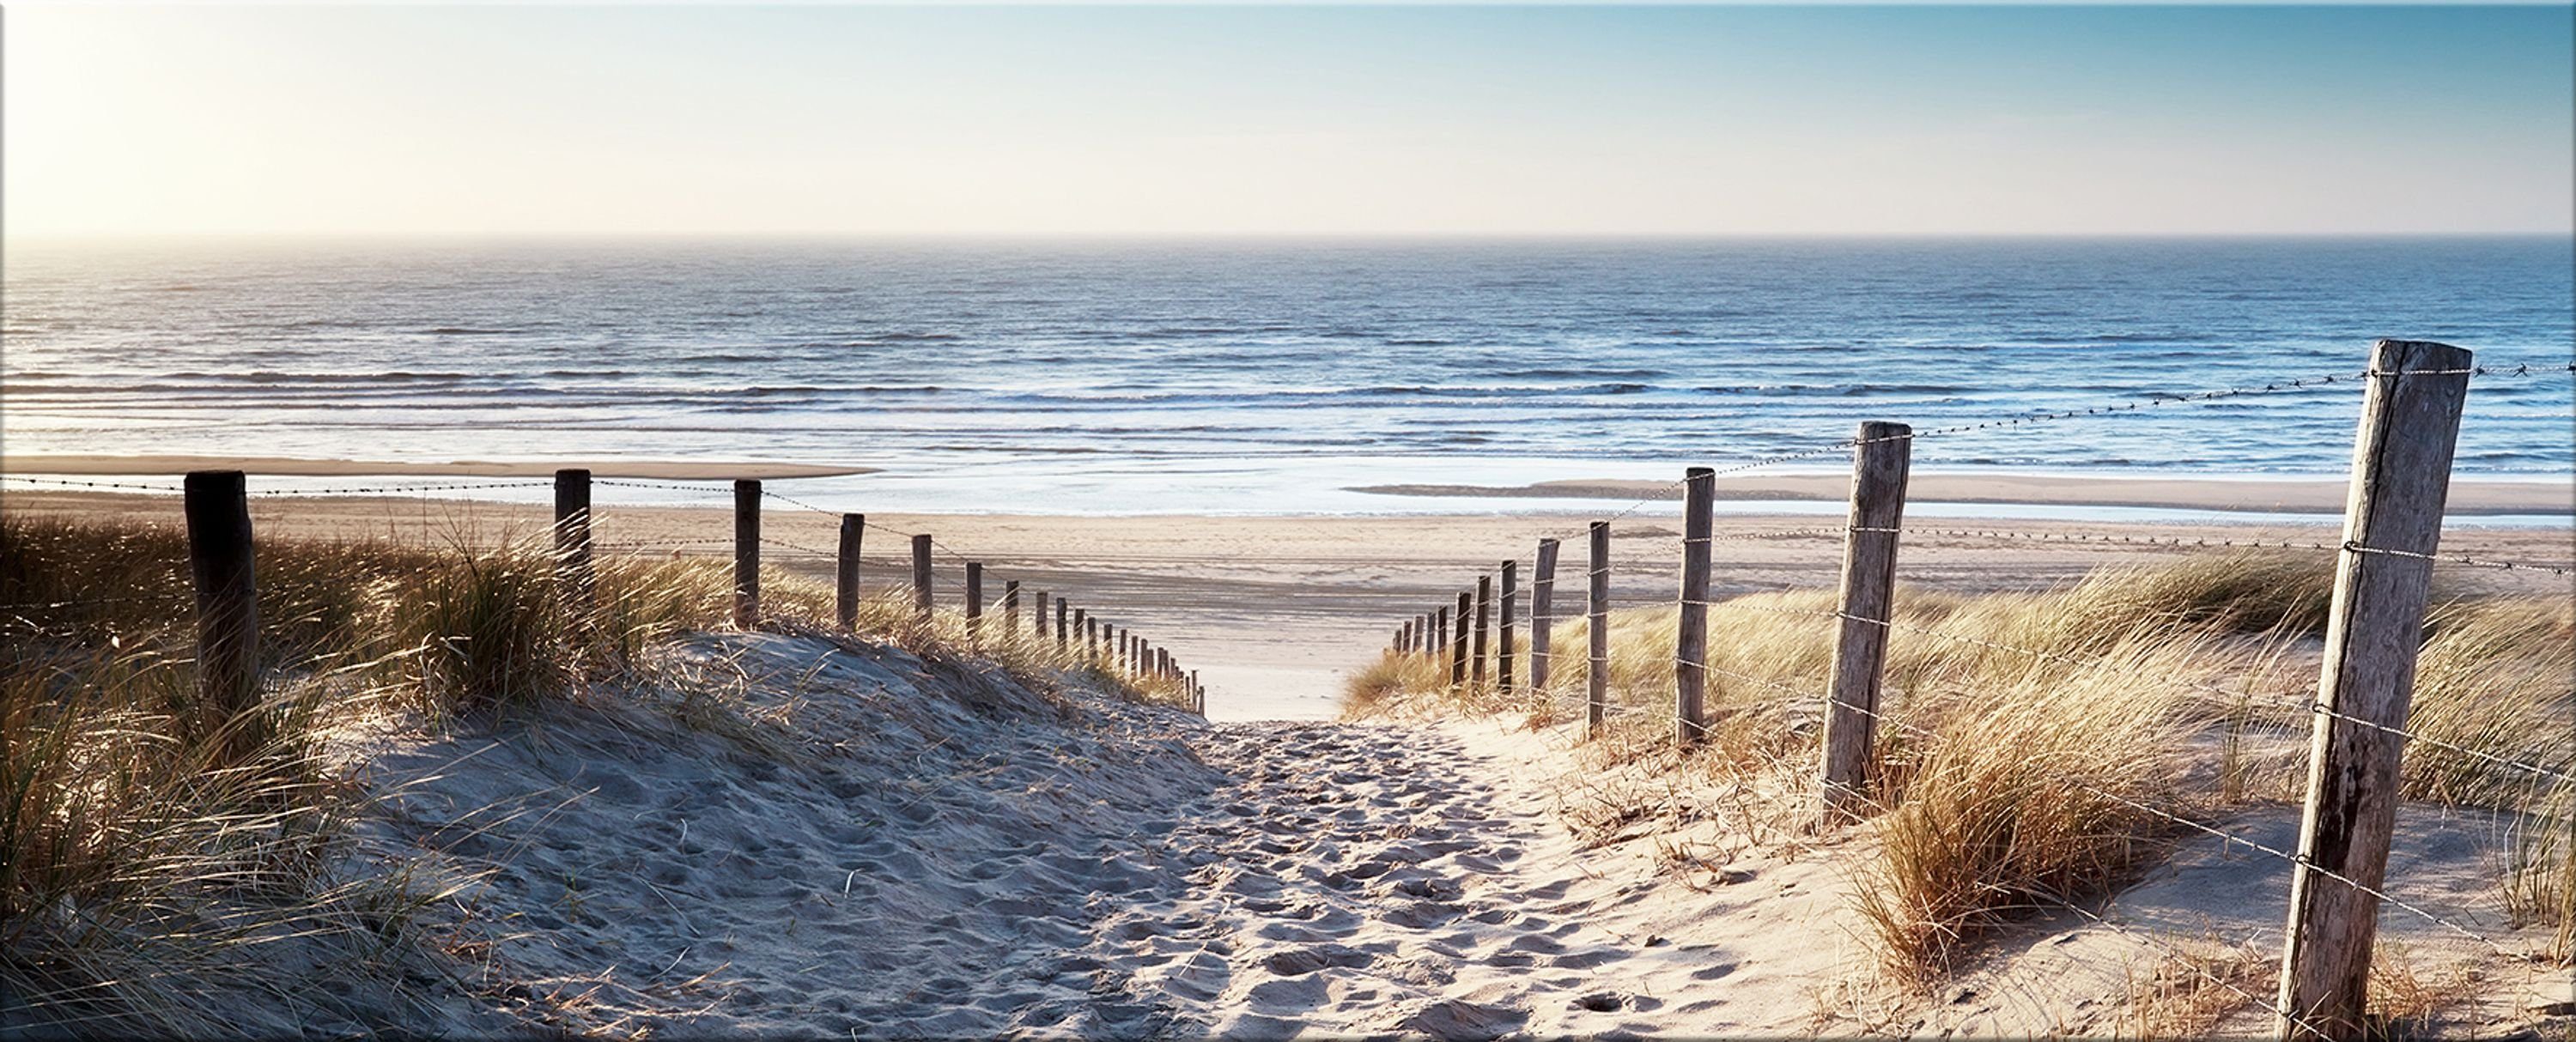 artissimo Glasbild Glasbild XXL Weg groß Steg, 125x50 Bild Wandbild Glas Meer cm Strand aus Strand-Landschaft: Meer zum